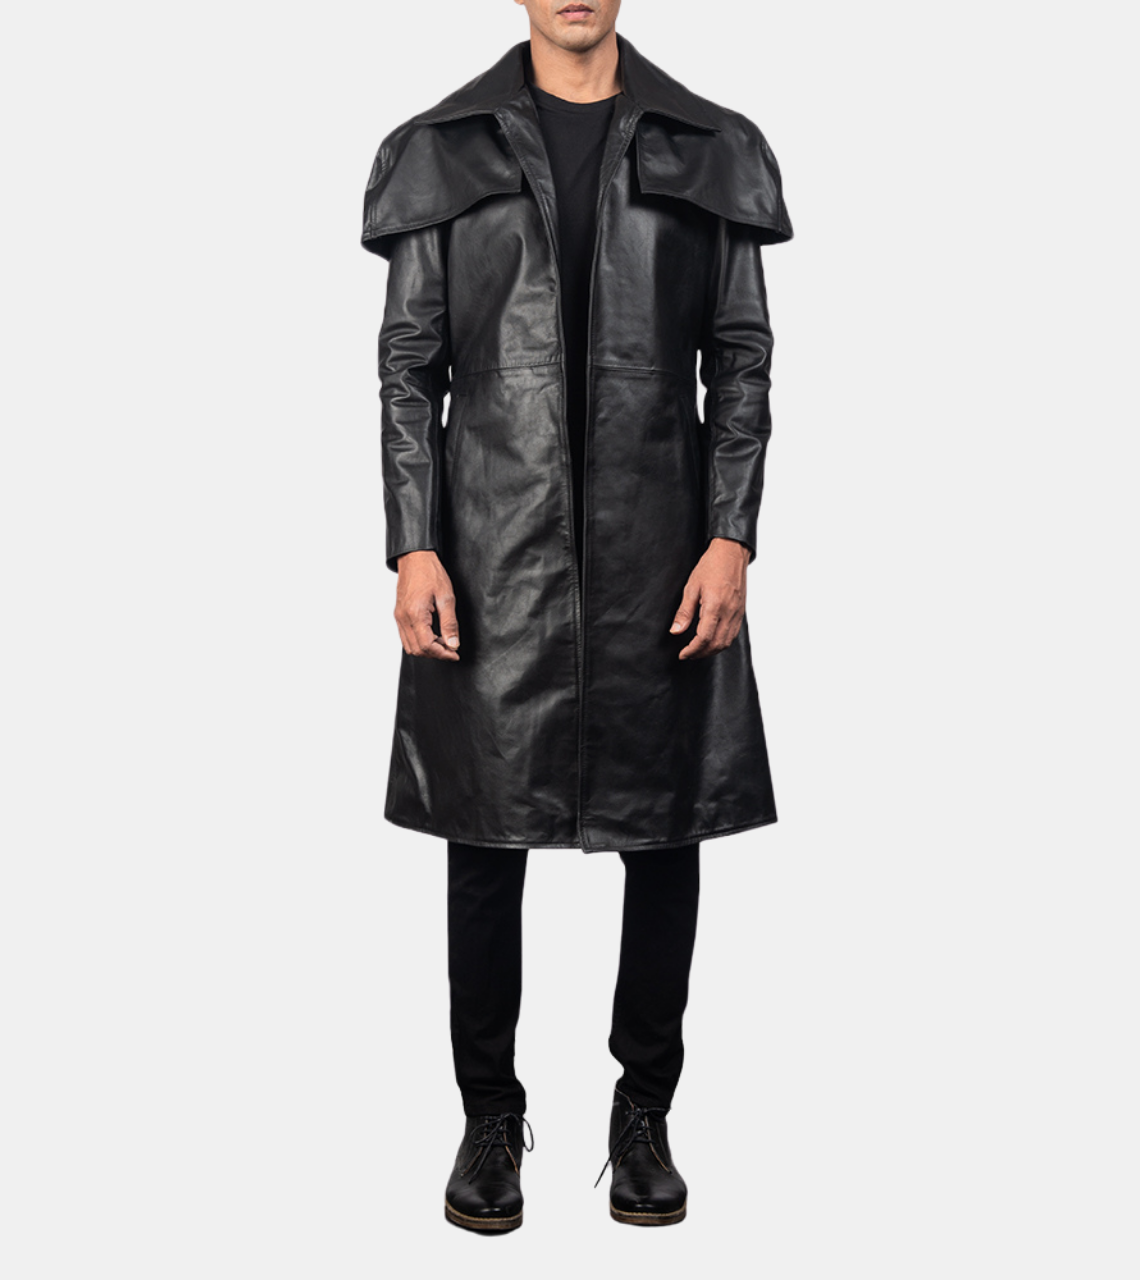 Danyon Men's Black Leather Coat